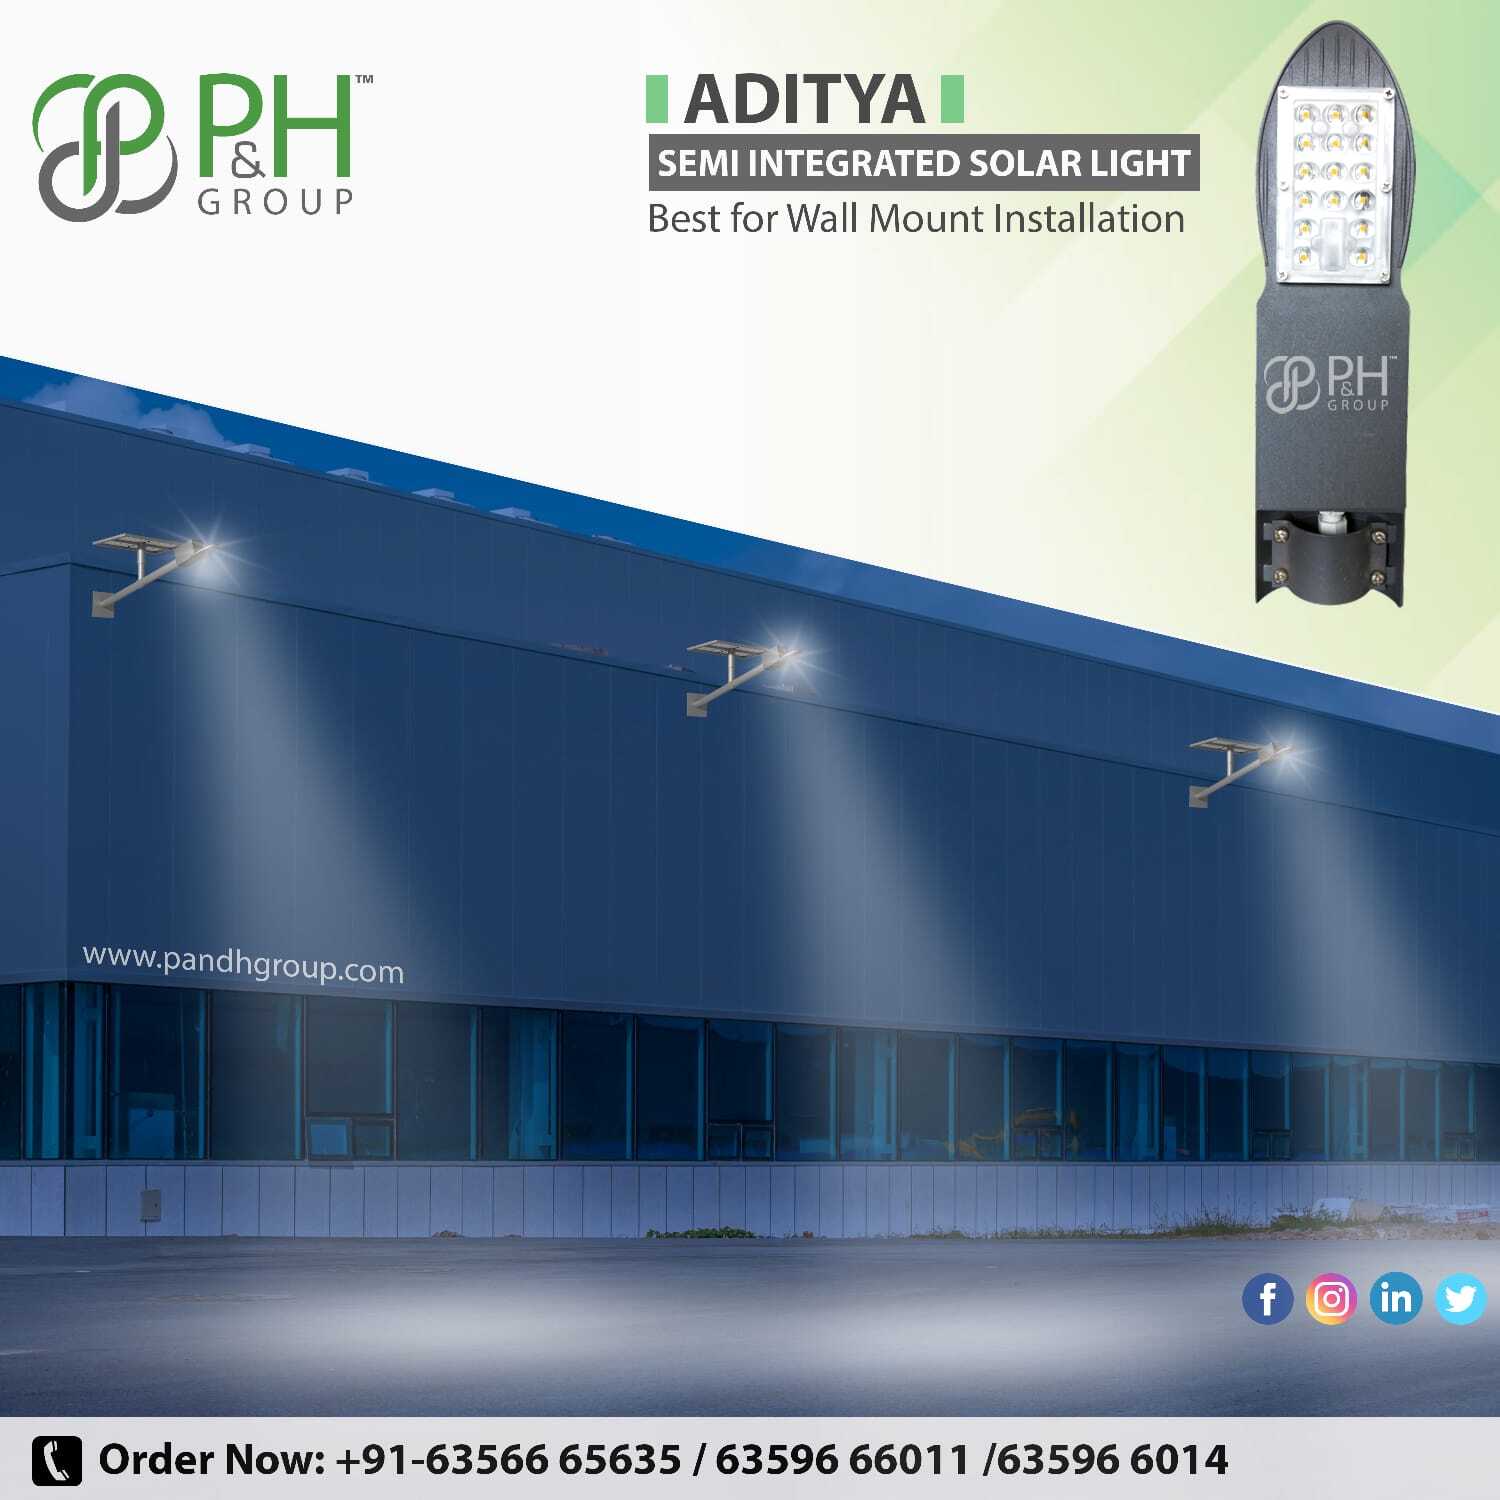 12w Semi integrated Solar Lighting System - Aditya model